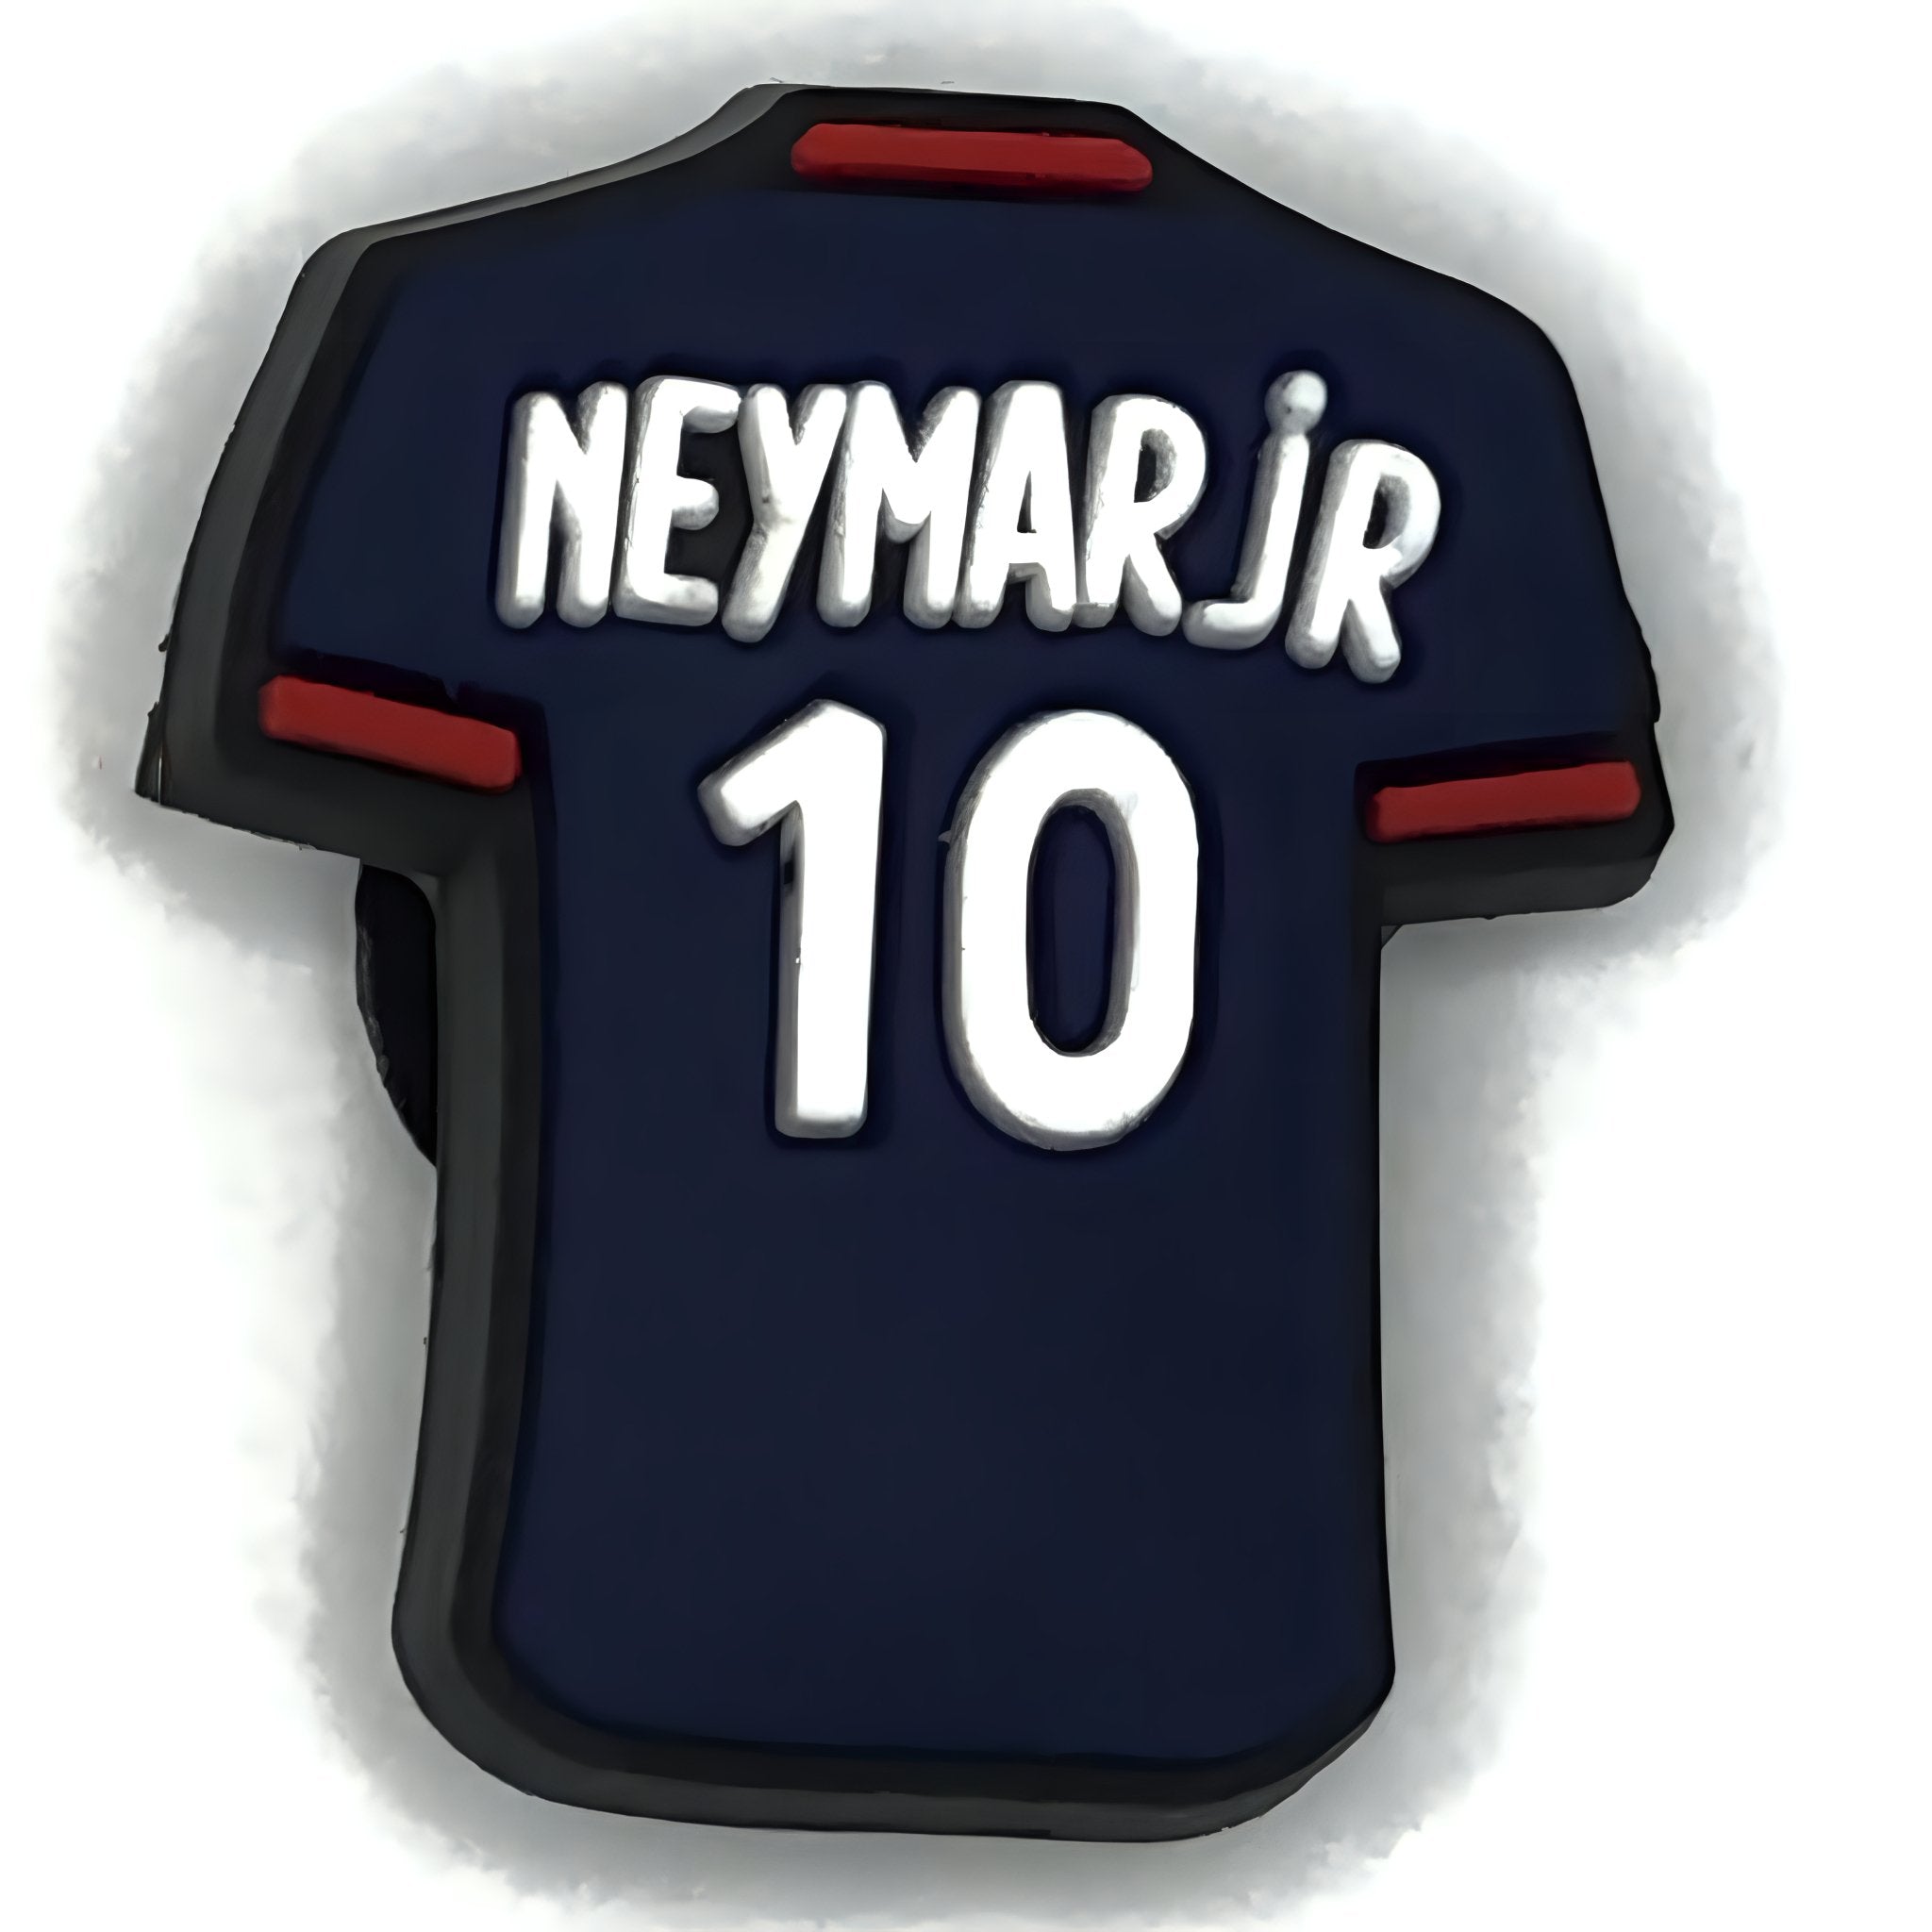 "Neymar Jersey Charm ⚽👕: Soccer Fanatic Style!" - Questsole